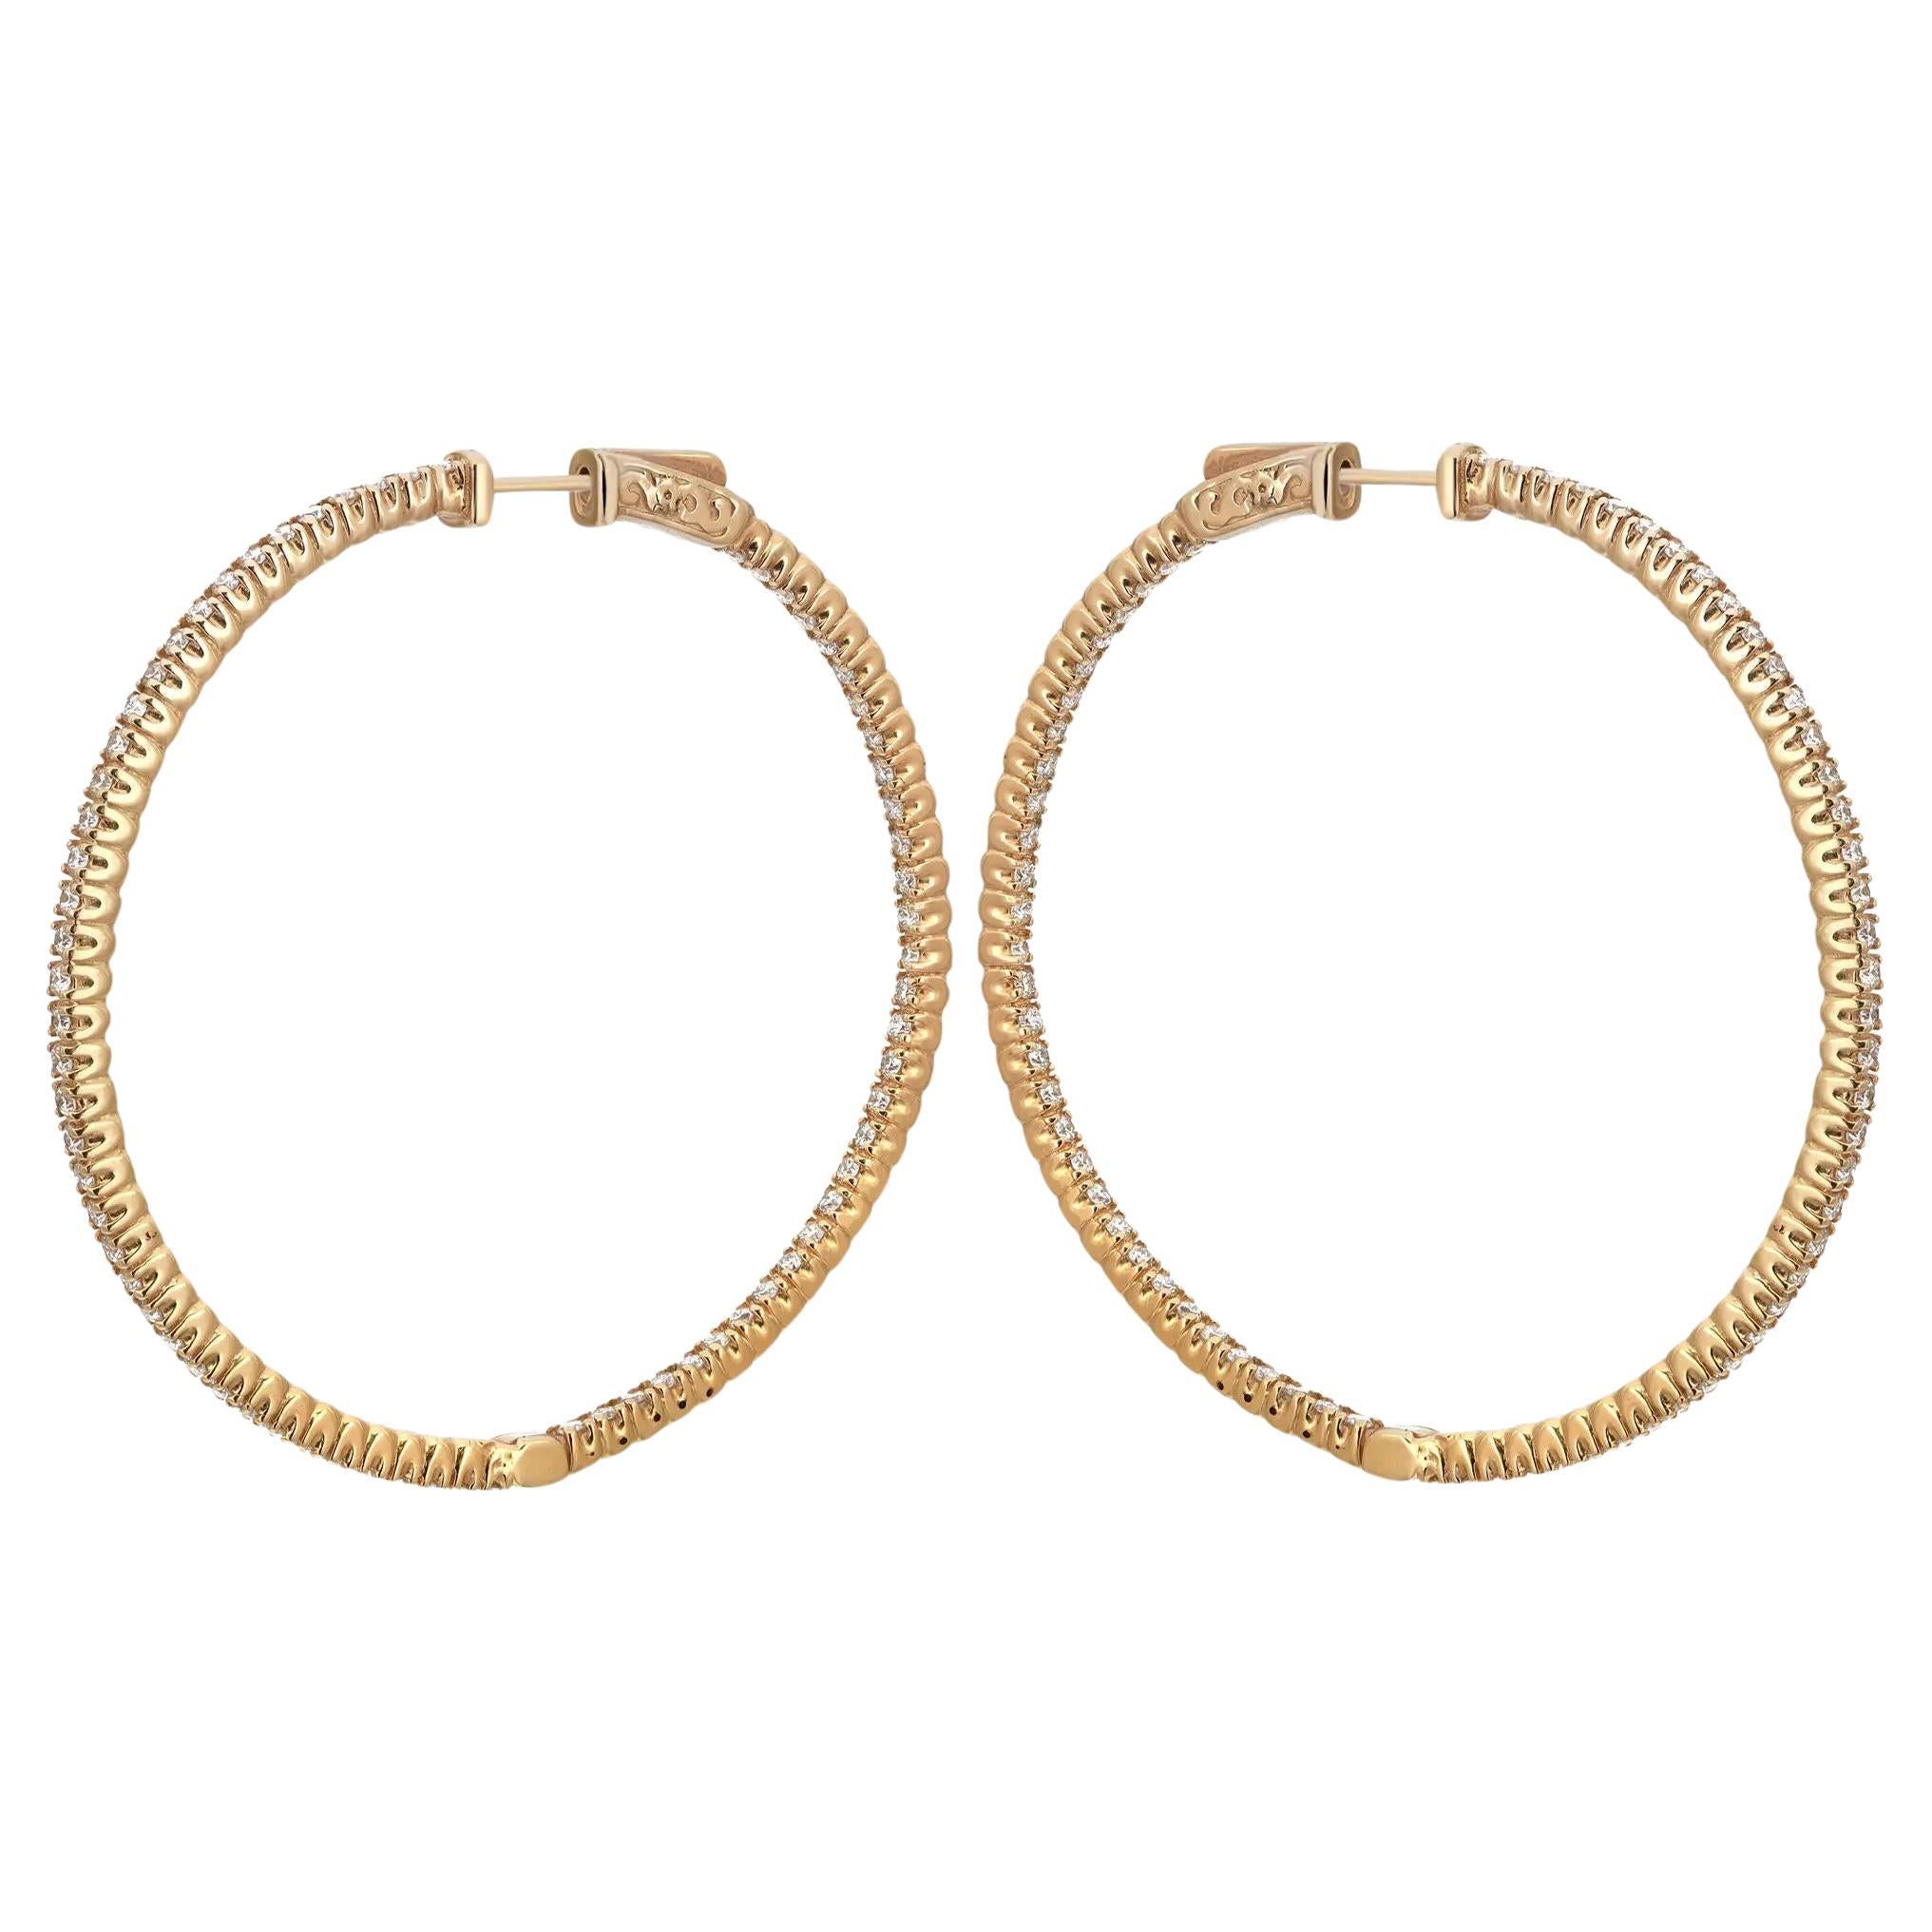 Prong Set Round Cut Diamond Inside Out Hoop Earrings 14K Yellow Gold 1.96Cttw 